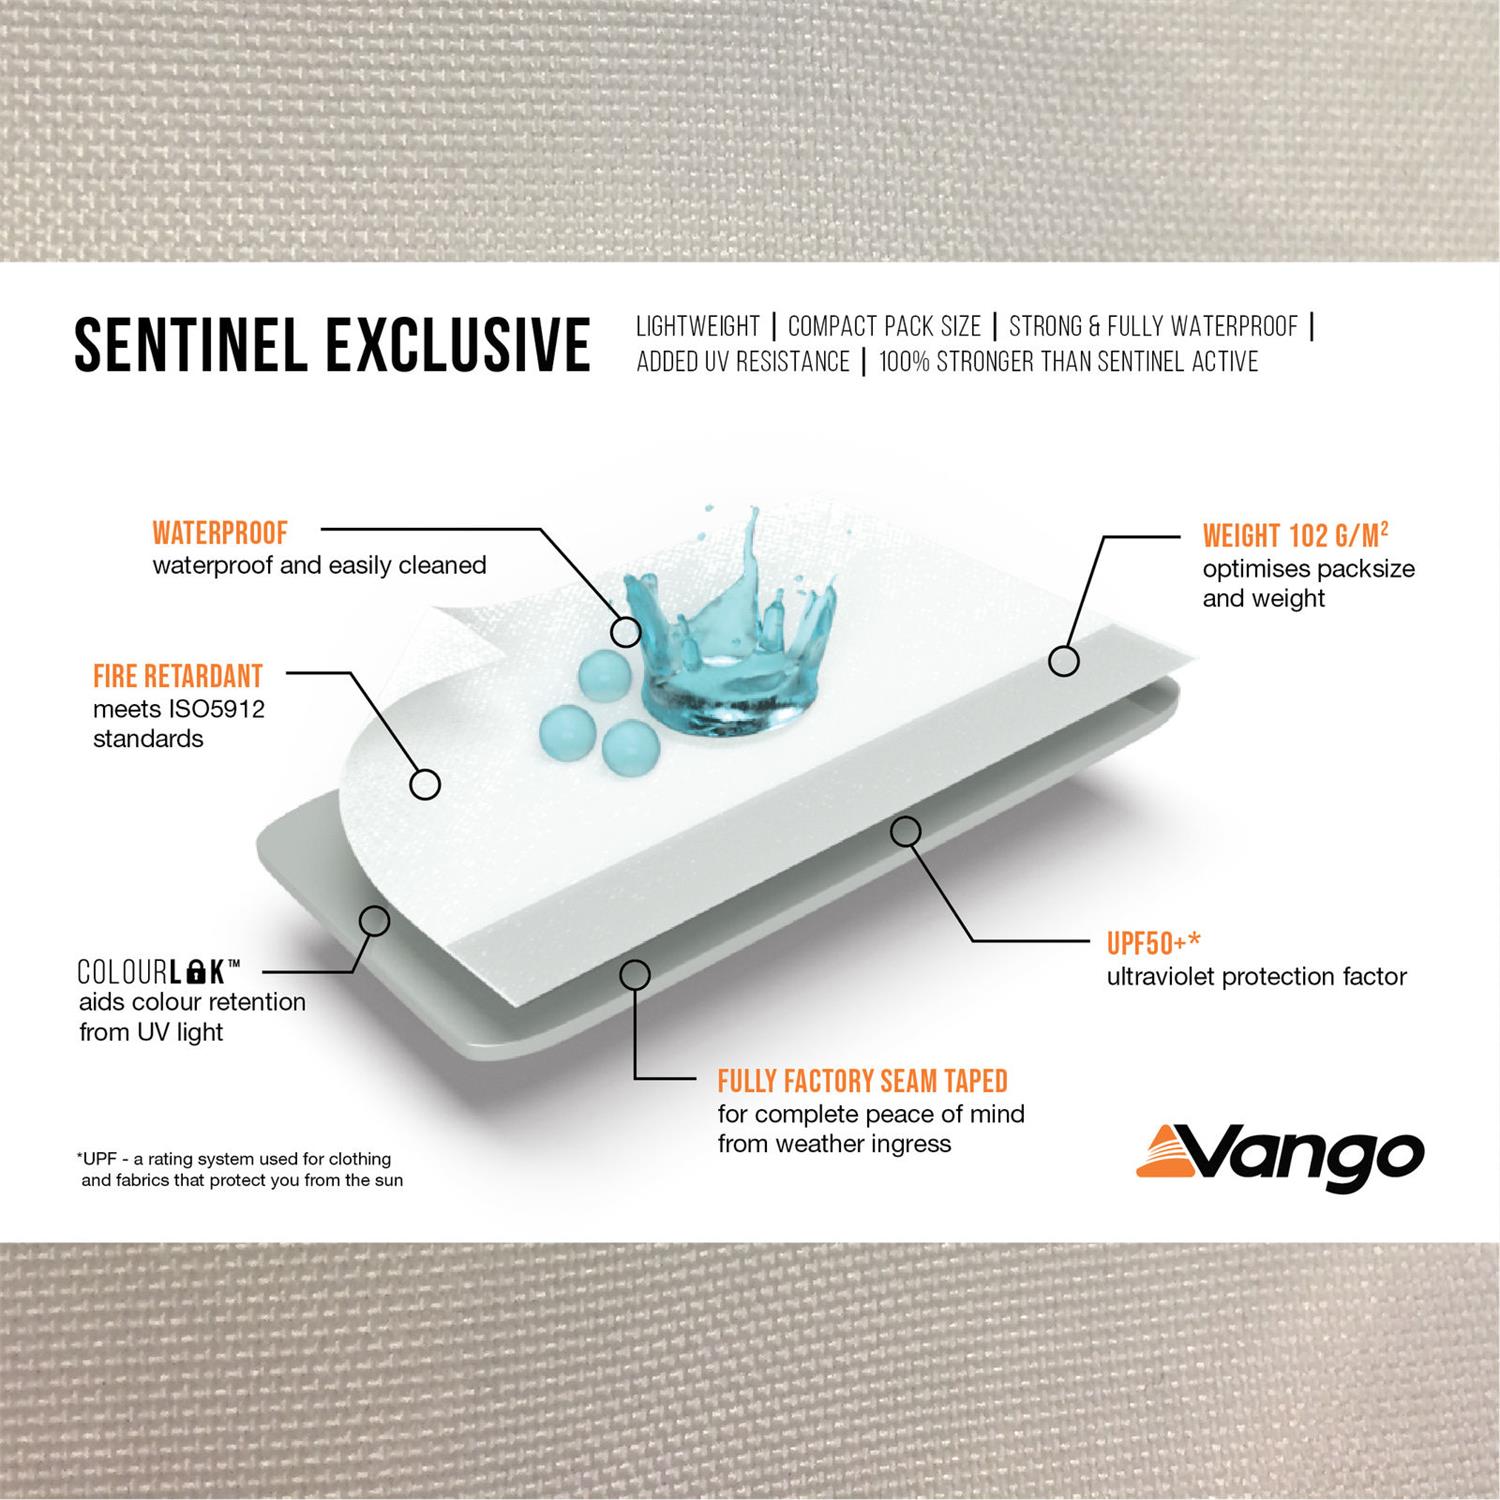 Vango specs for Sentinel Exclusive.